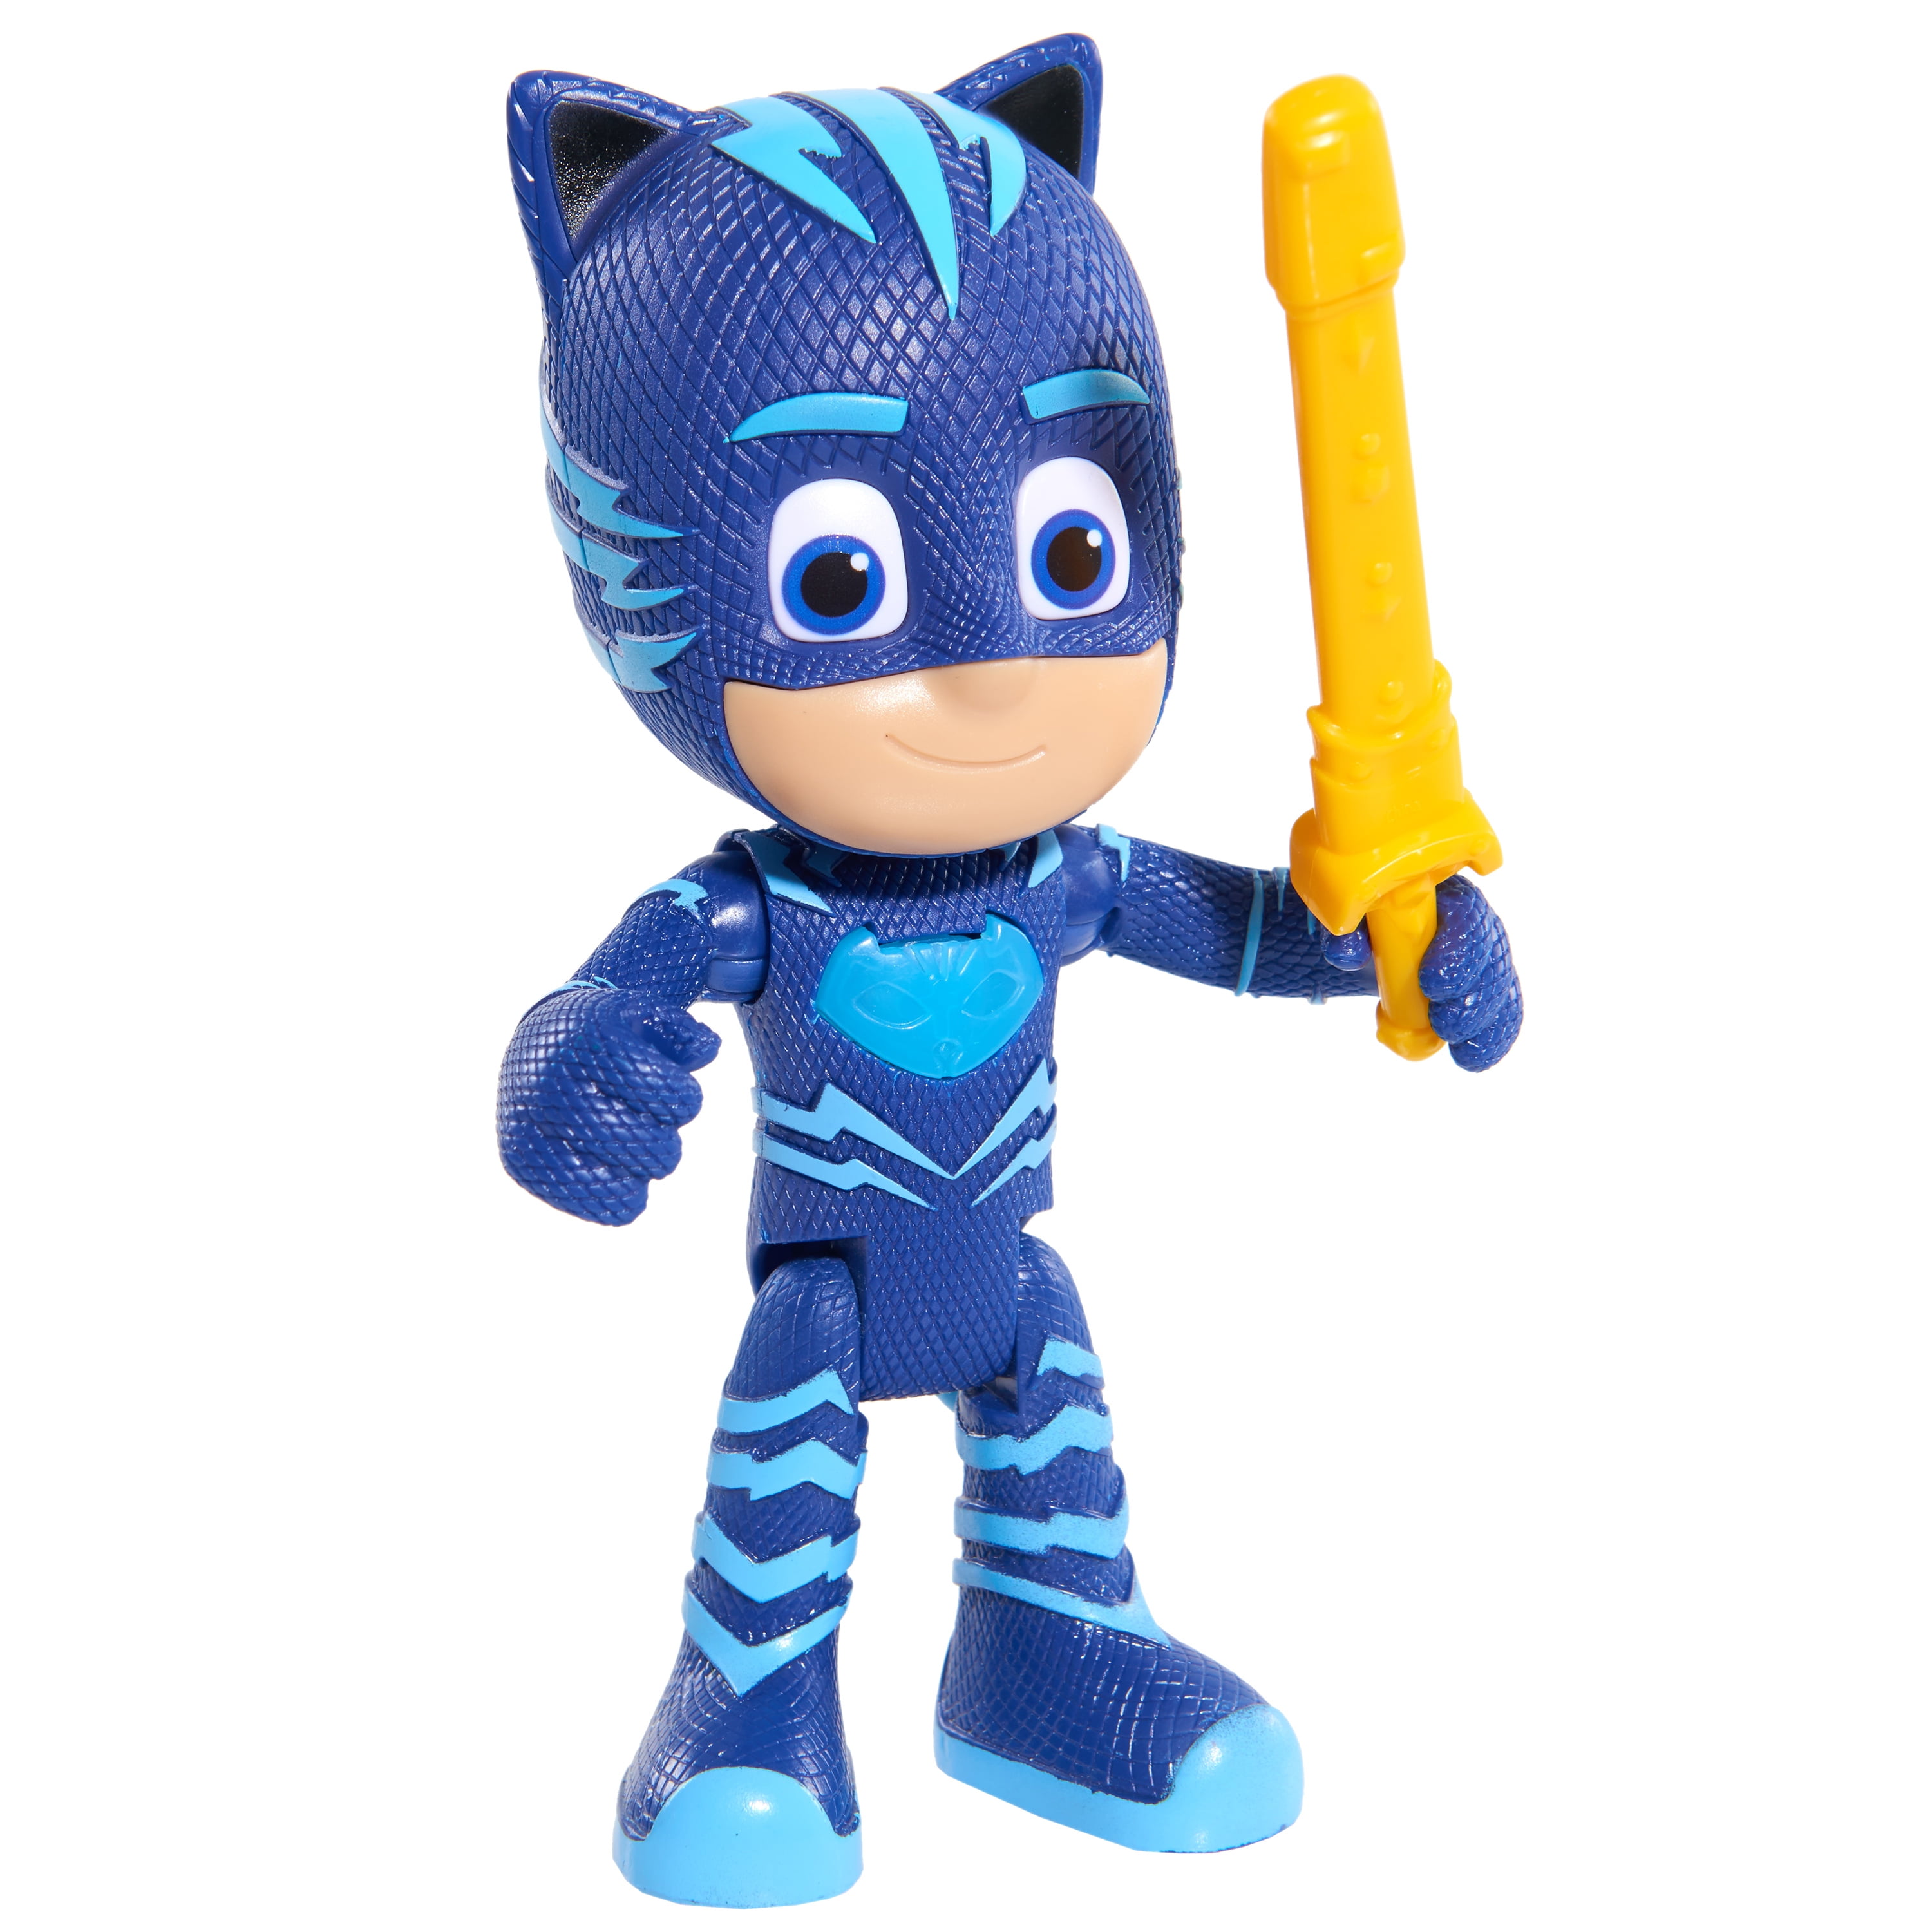 PJ Masks Deluxe Talking Cat Boy Action Figure 6" Poseable Hero Kids Toy Gift New 